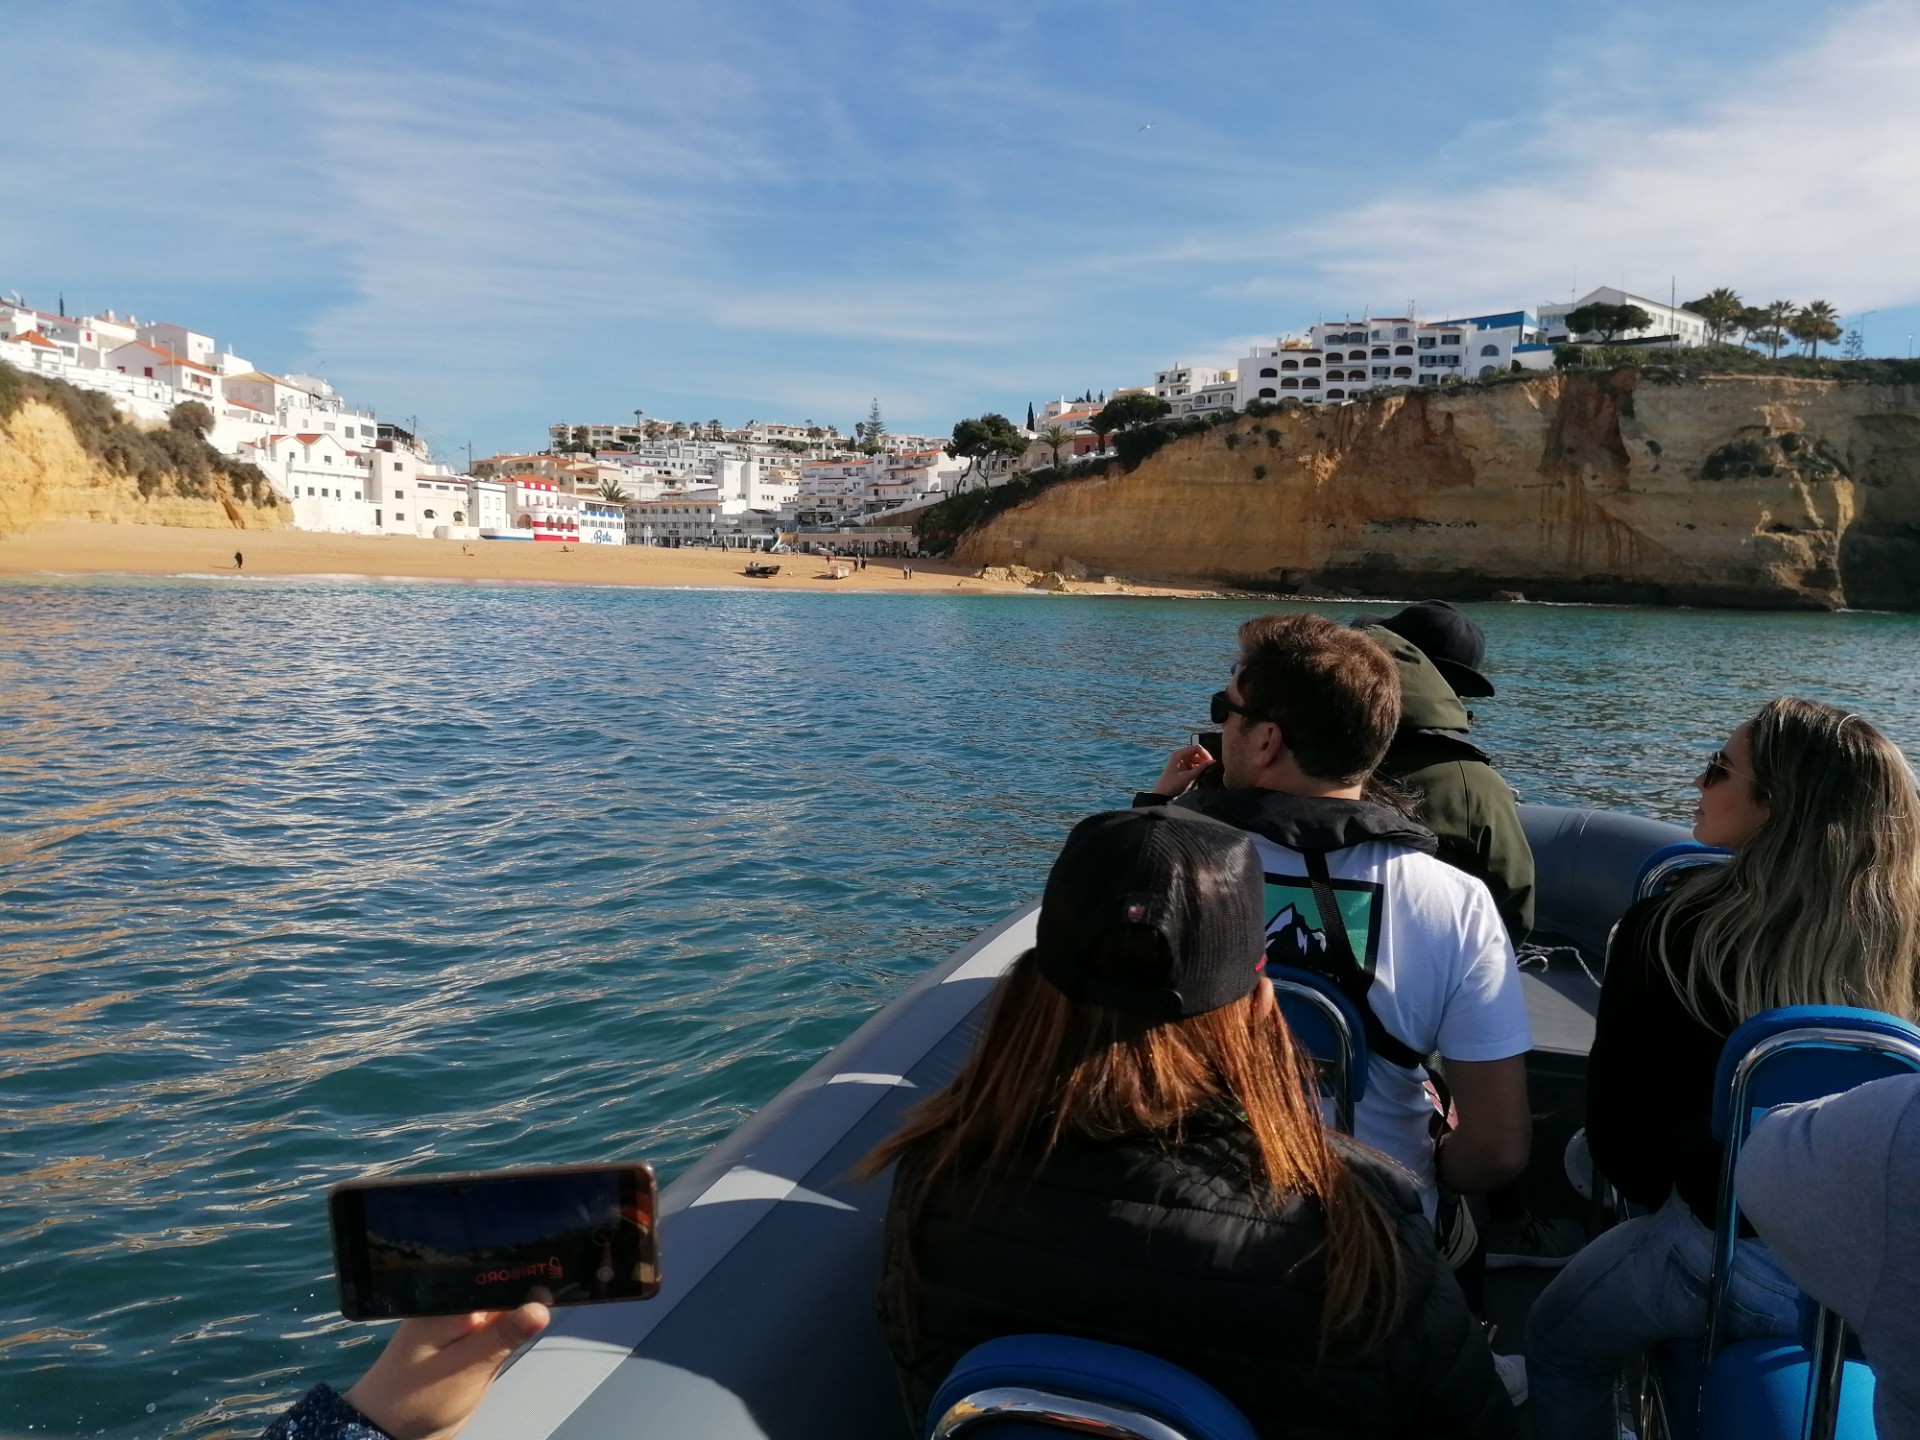 Enjoy a nice boat ride in the Algarve